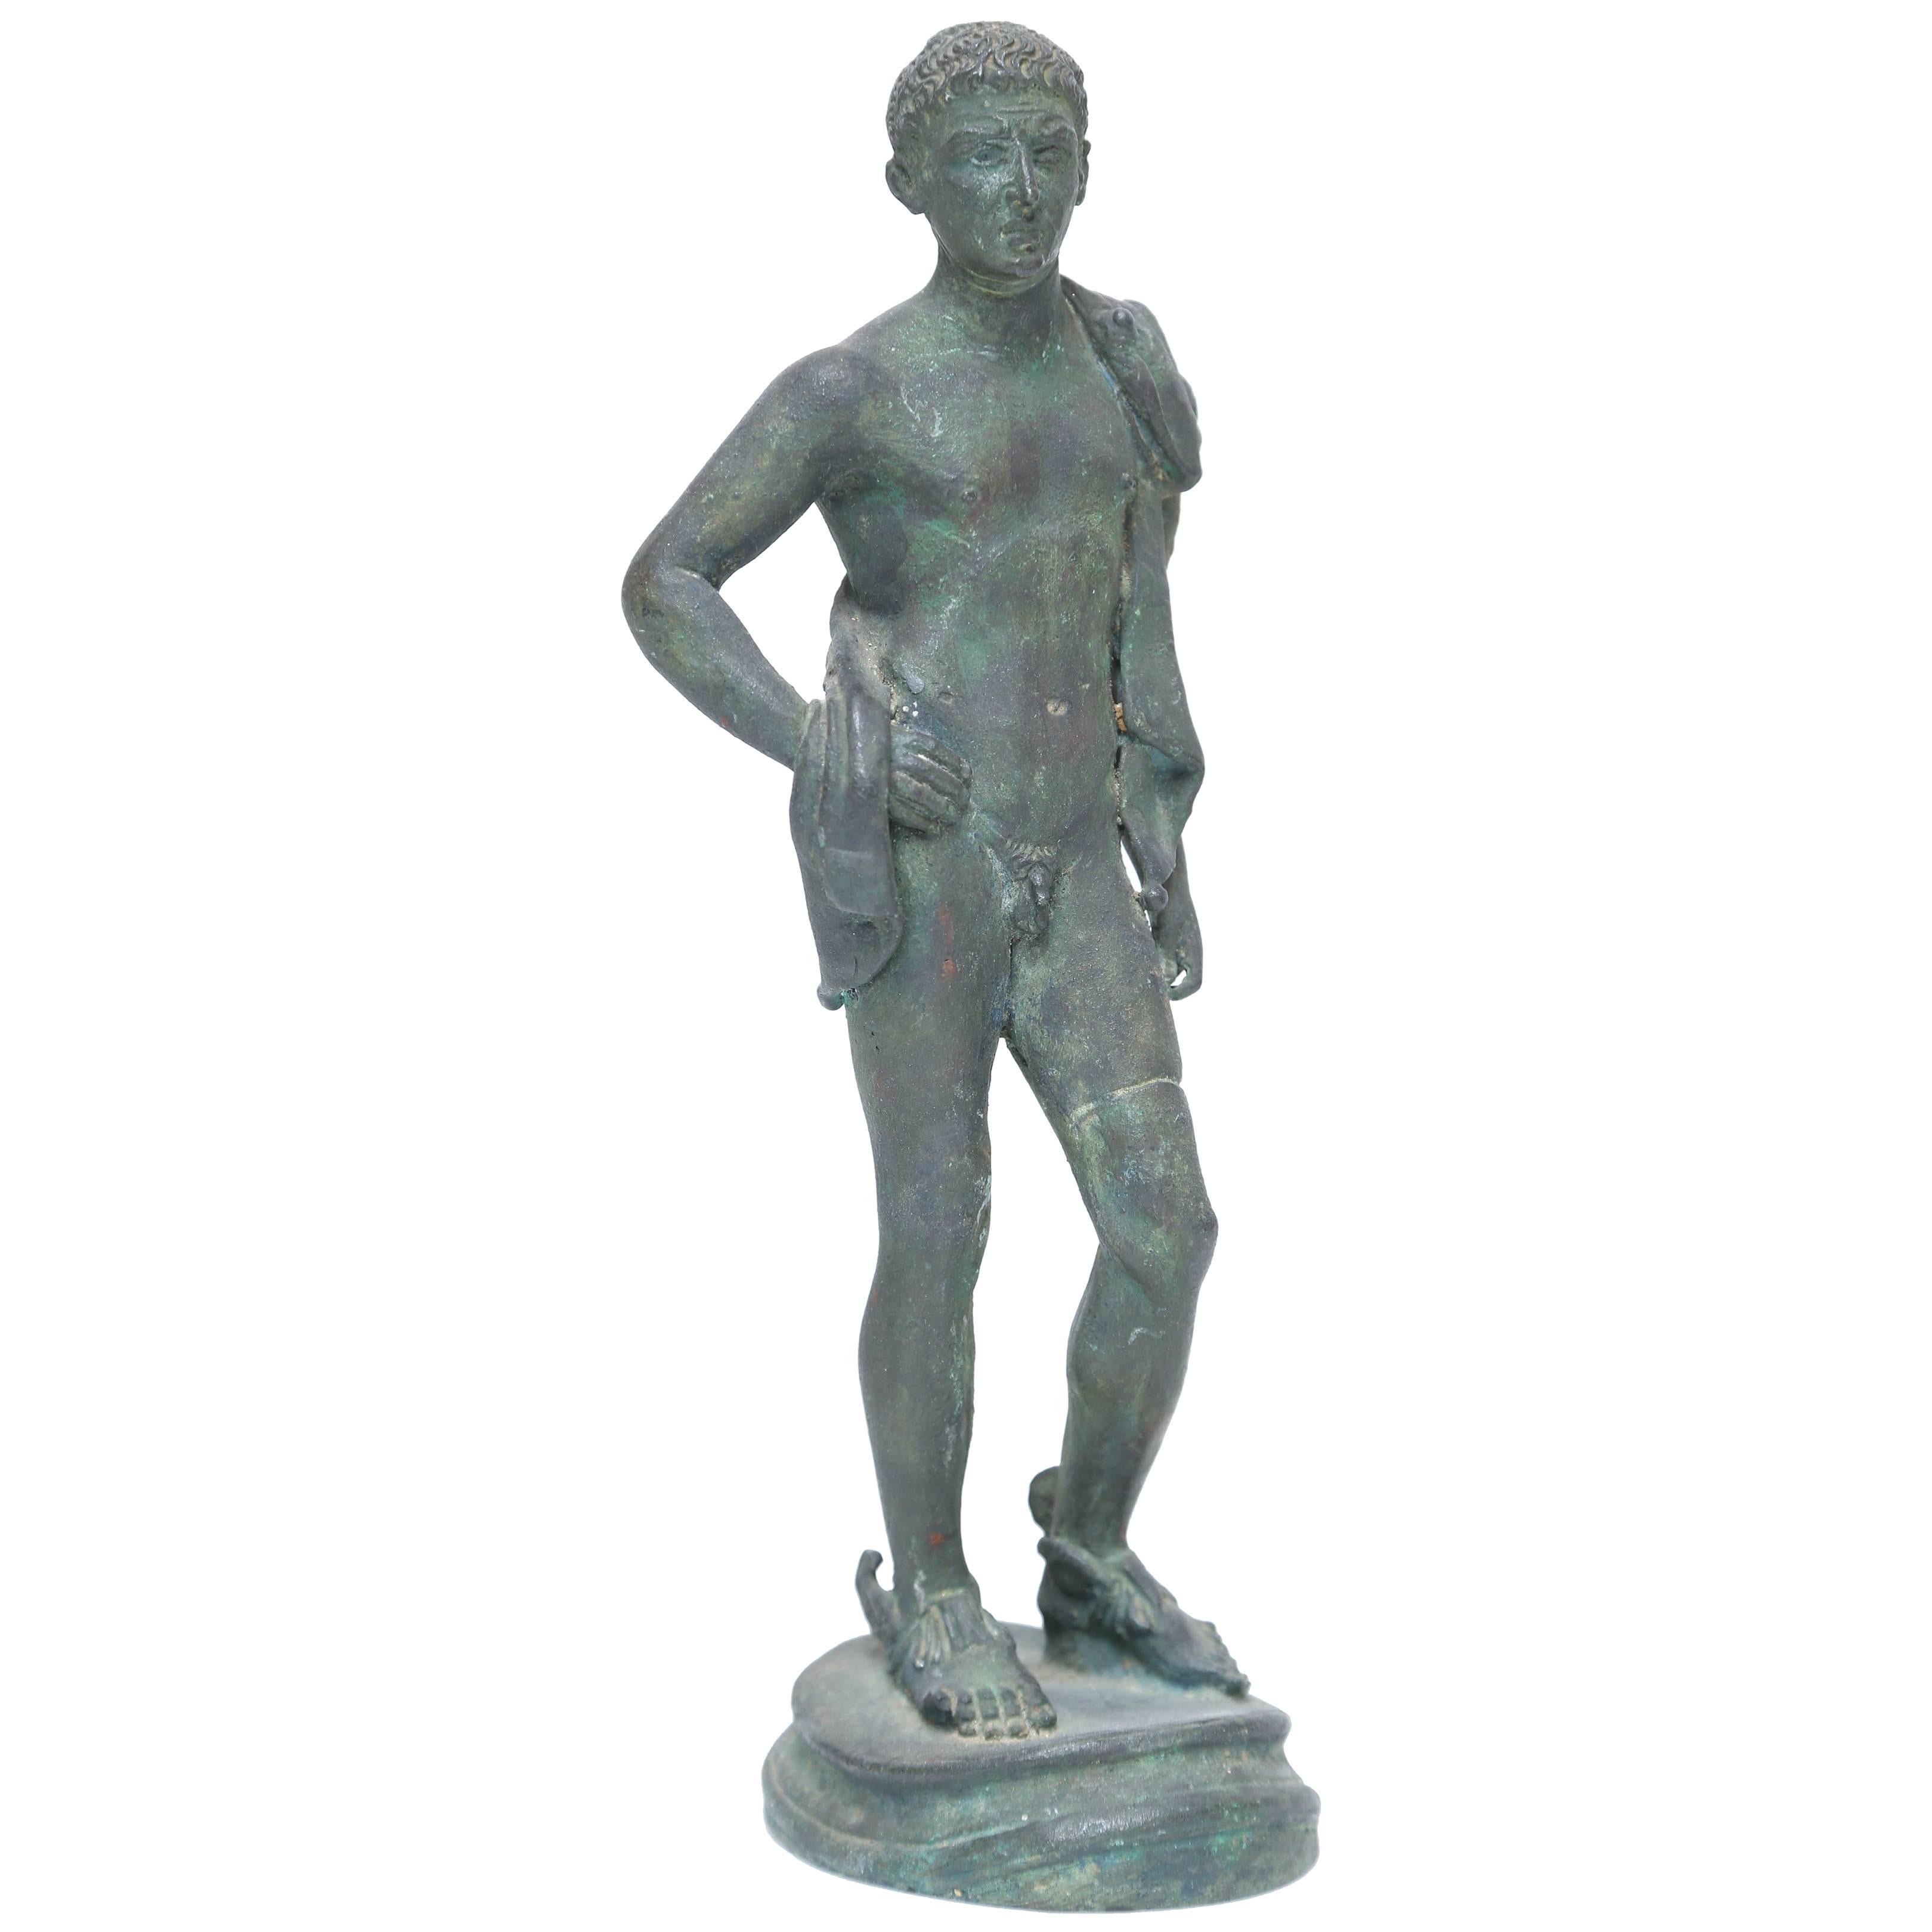 Grand Tour Bronze of Hermes, Italian Chiurazzi Foundry